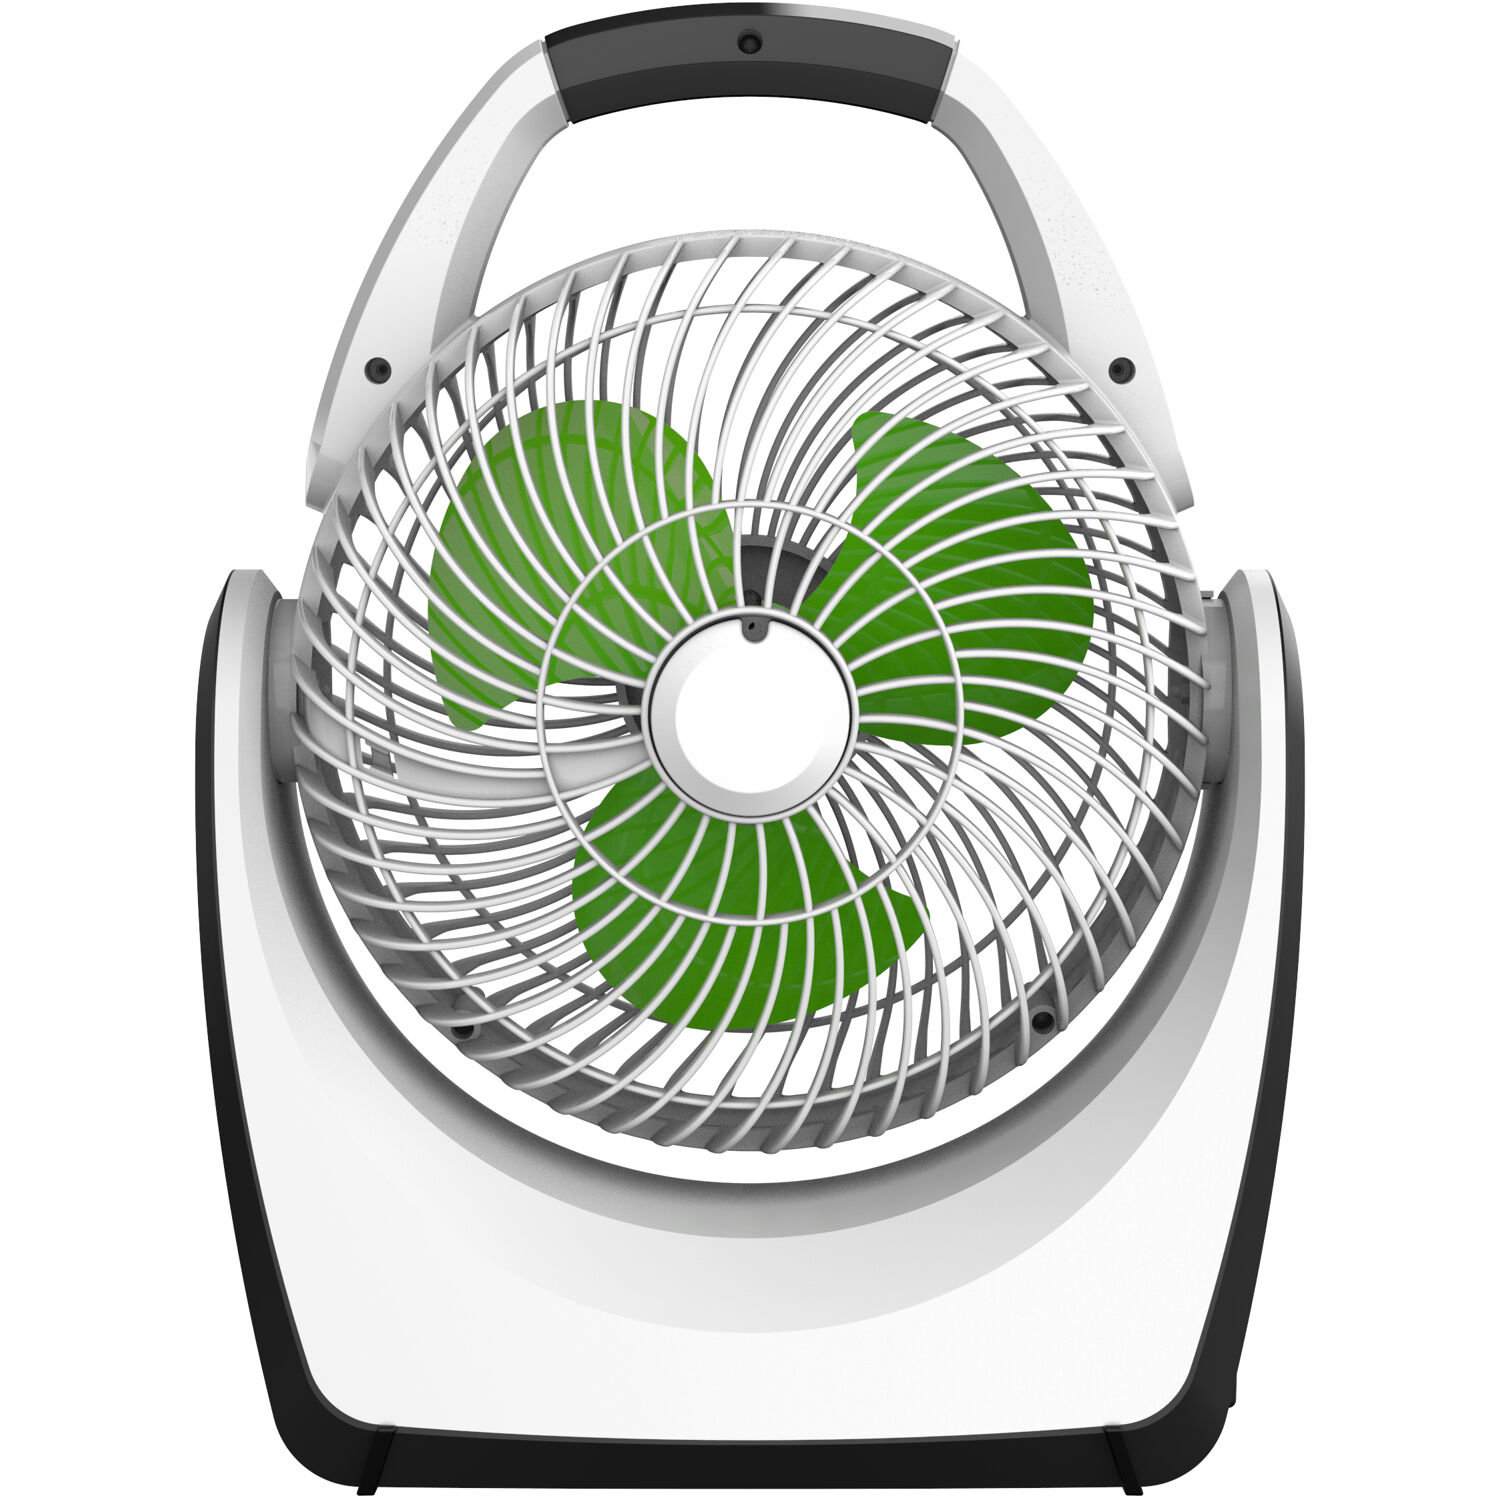 Вентилятор на аккумуляторе. Вентилятор Lasko квадратный. Li ion Battery Fan вентилятор. Чайник Lasko.